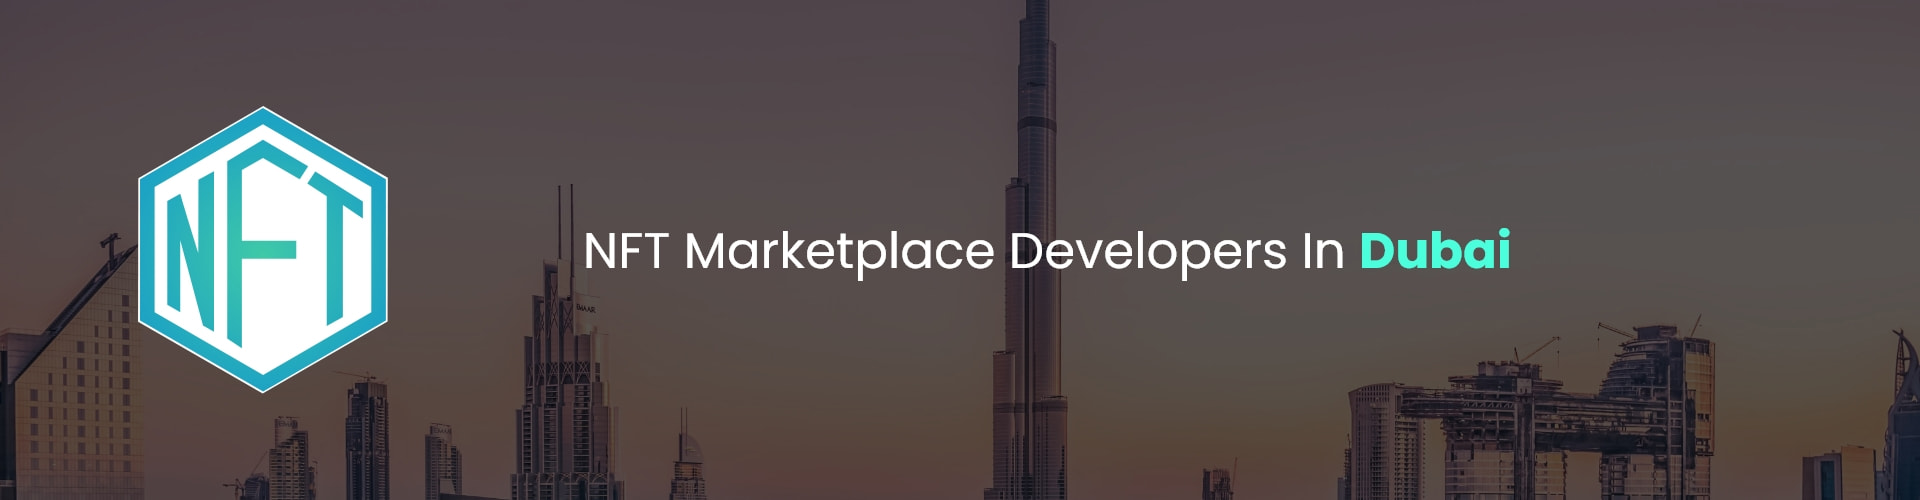 hire nft marketplace developers in dubai